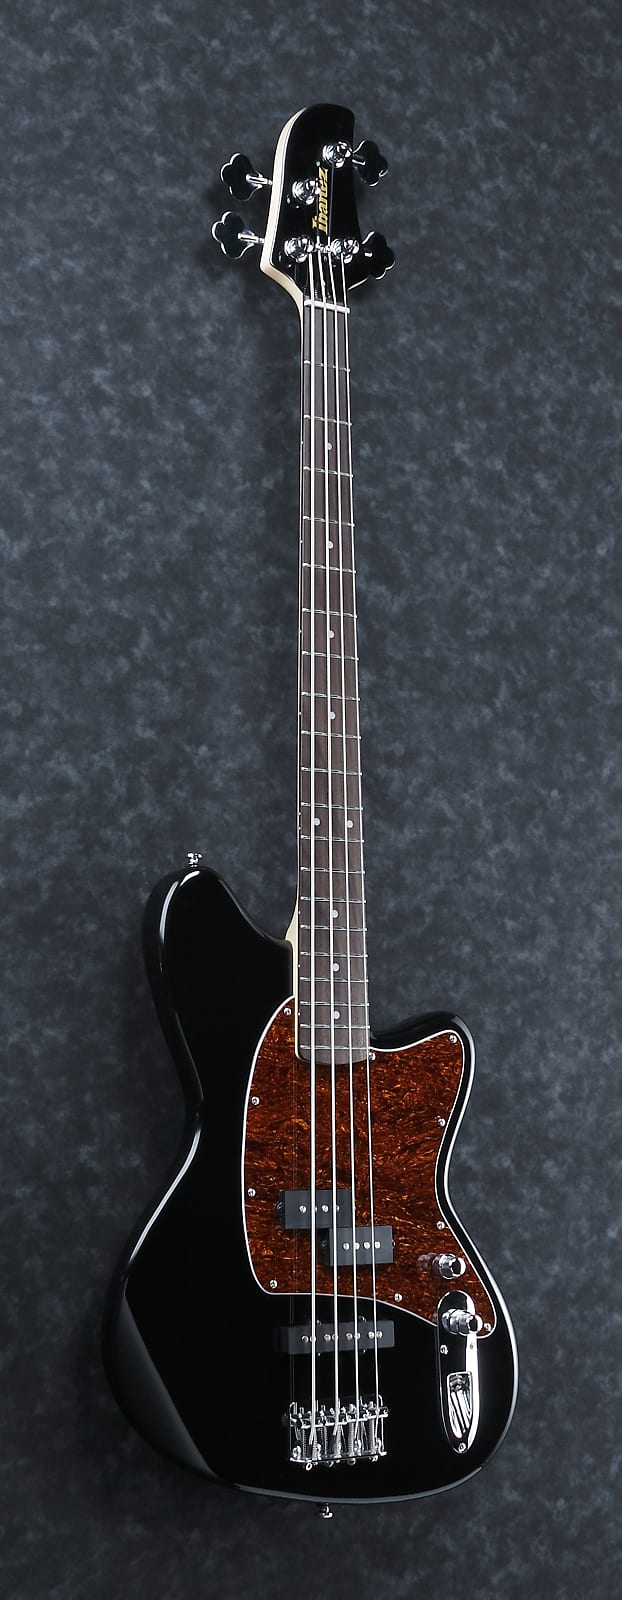 Ibanez TMB100 Talman Standard Electric Bass Guitar Black